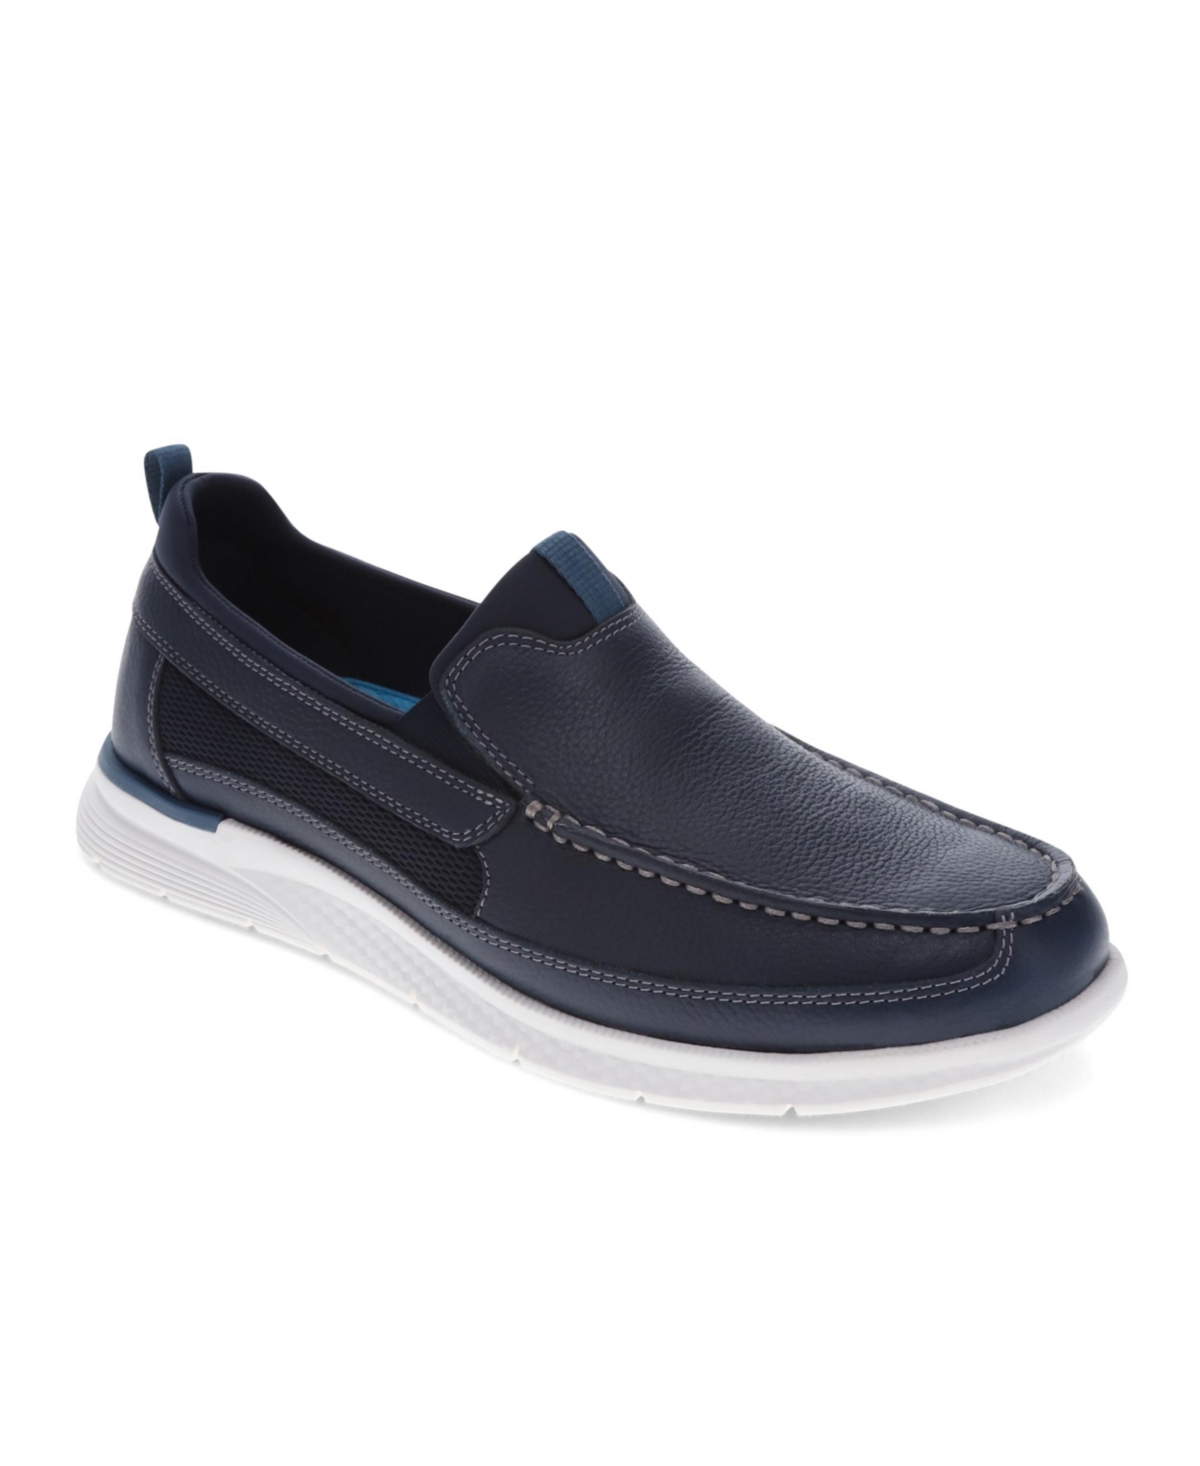 Men's Holgate Boat Shoes - Briar